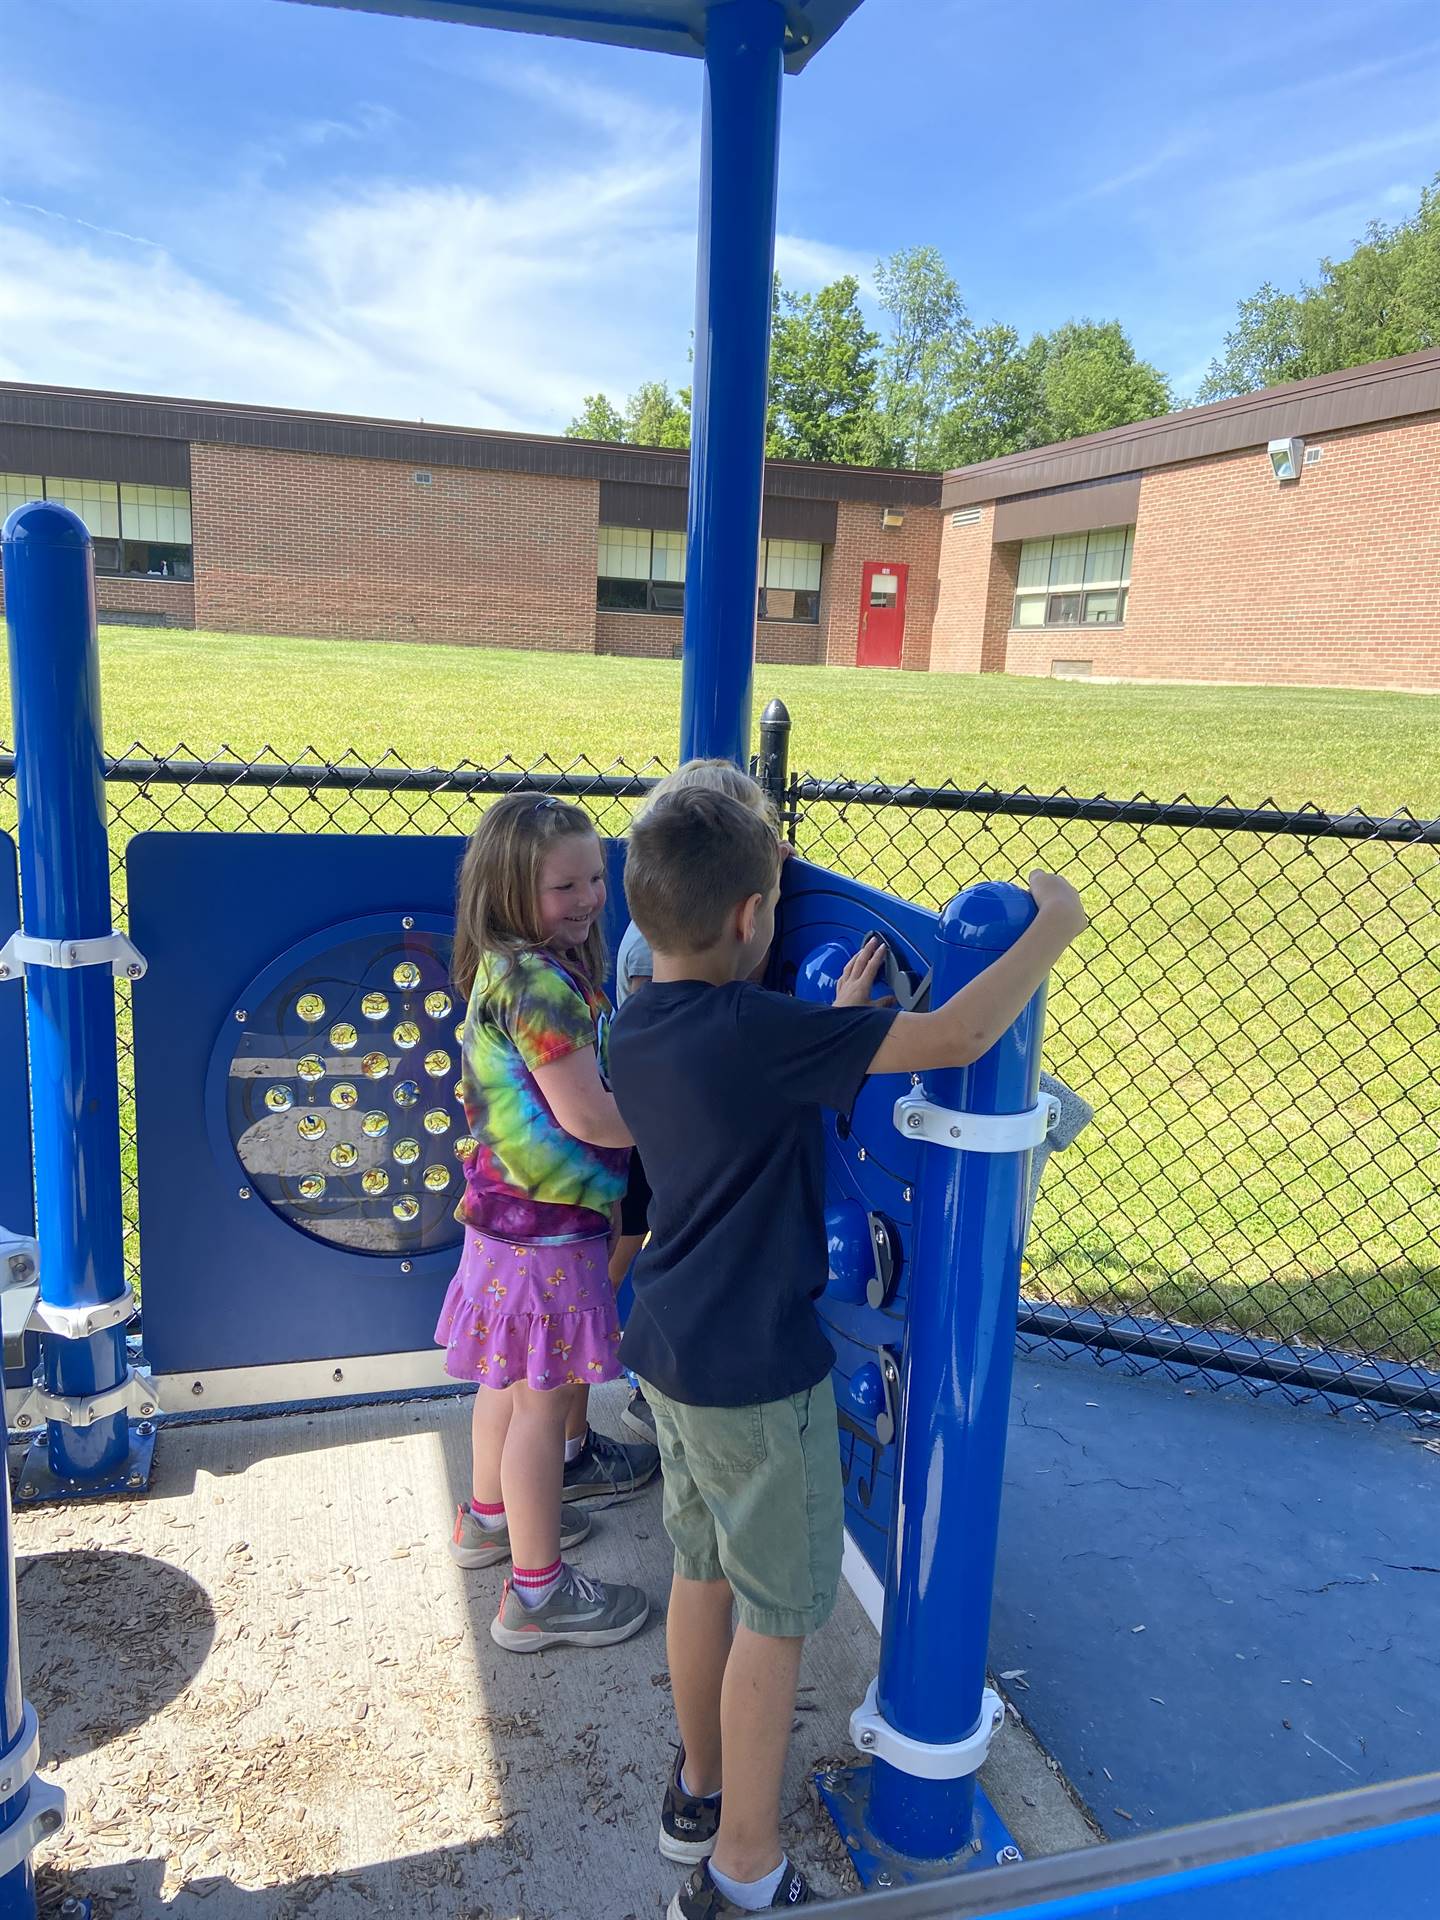 2 kids on playground